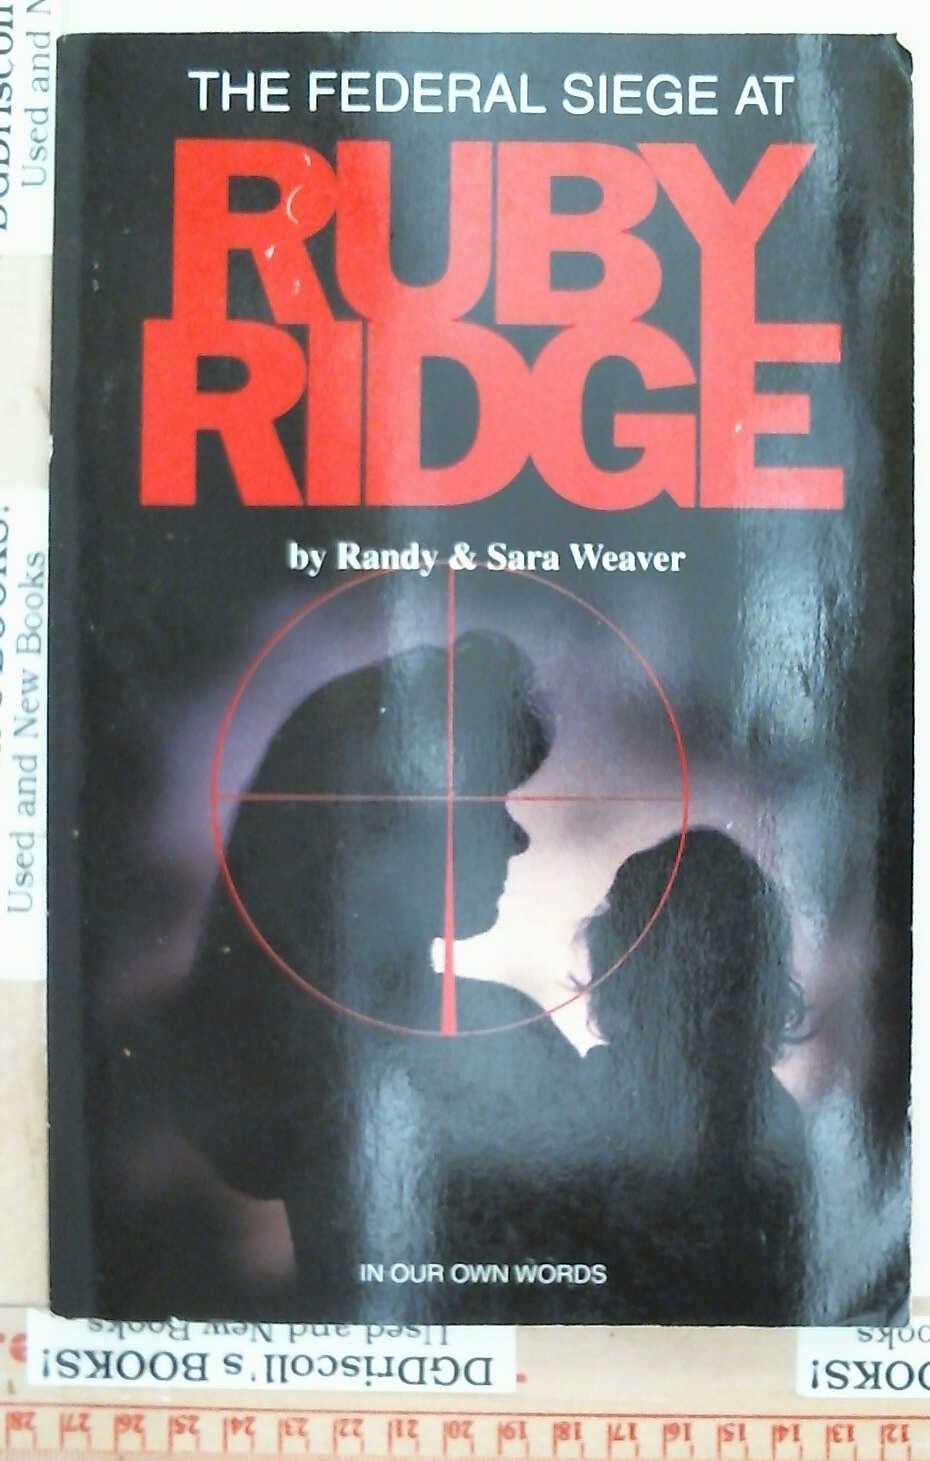 The Federal Siege at Ruby Ridge